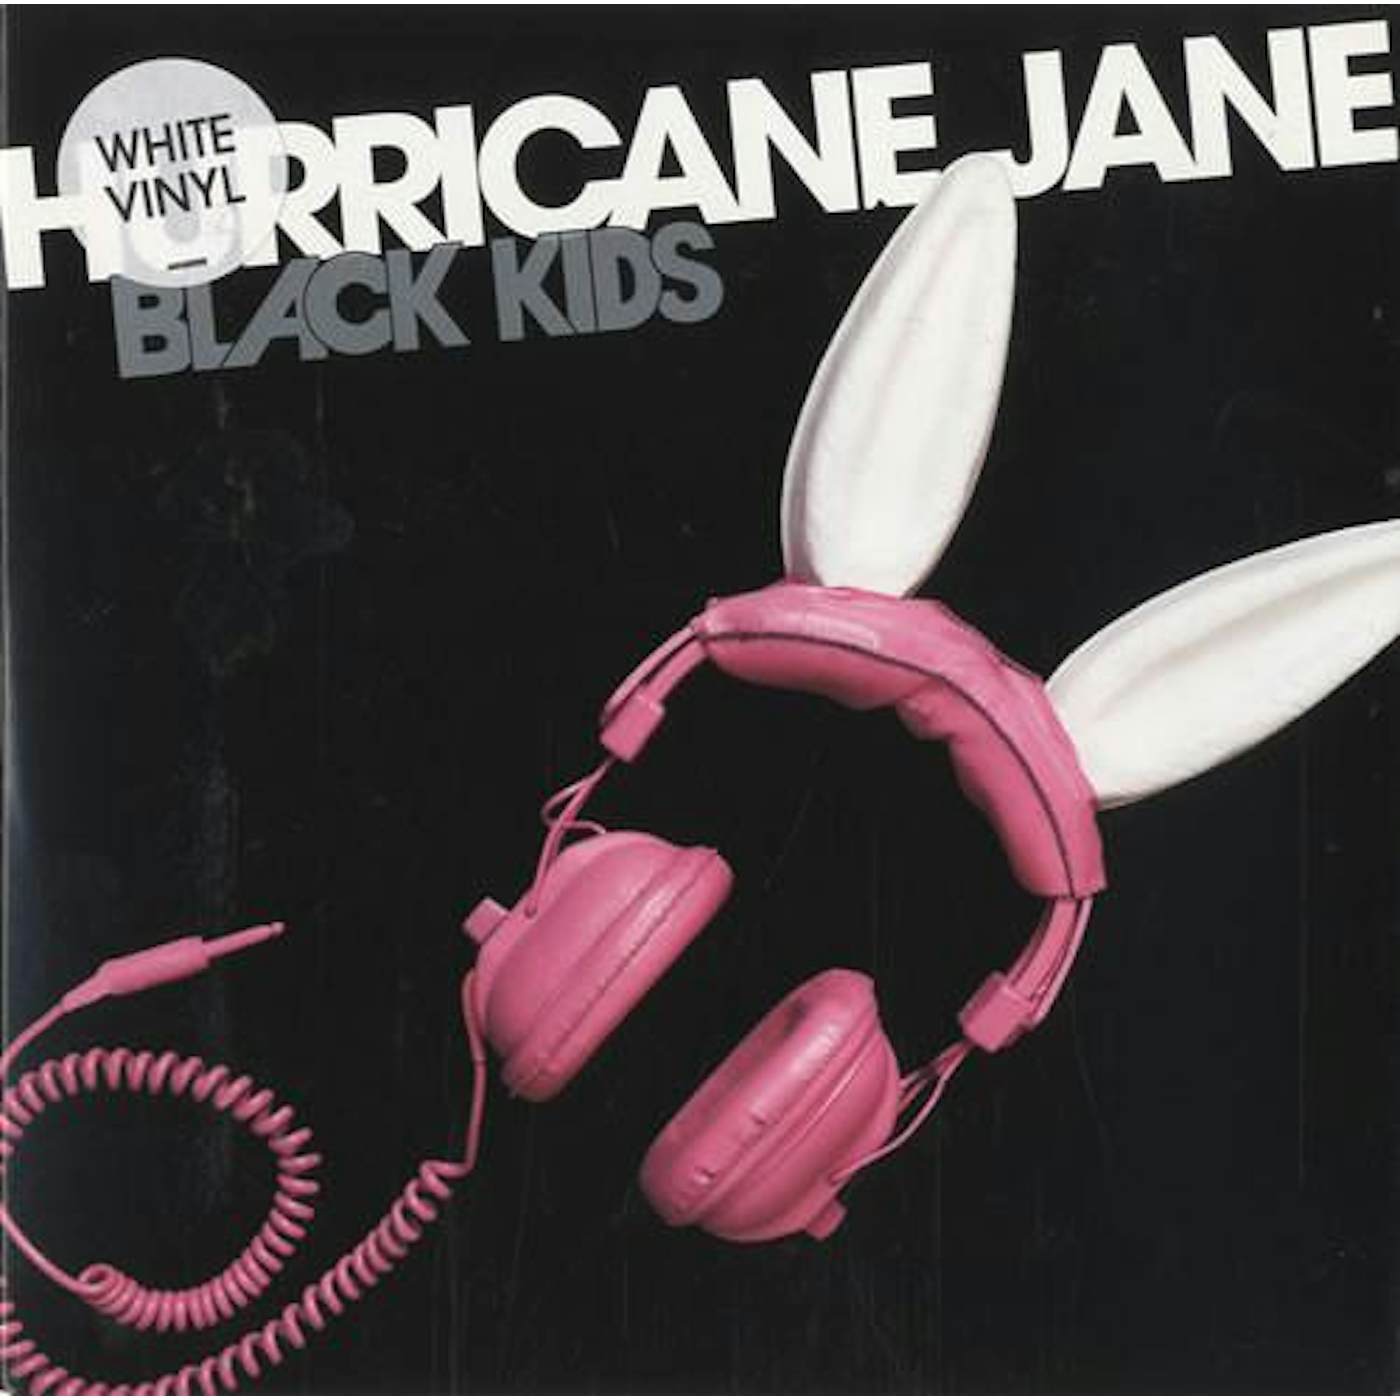 Black Kids HURRICANE JANE 2 Vinyl Record